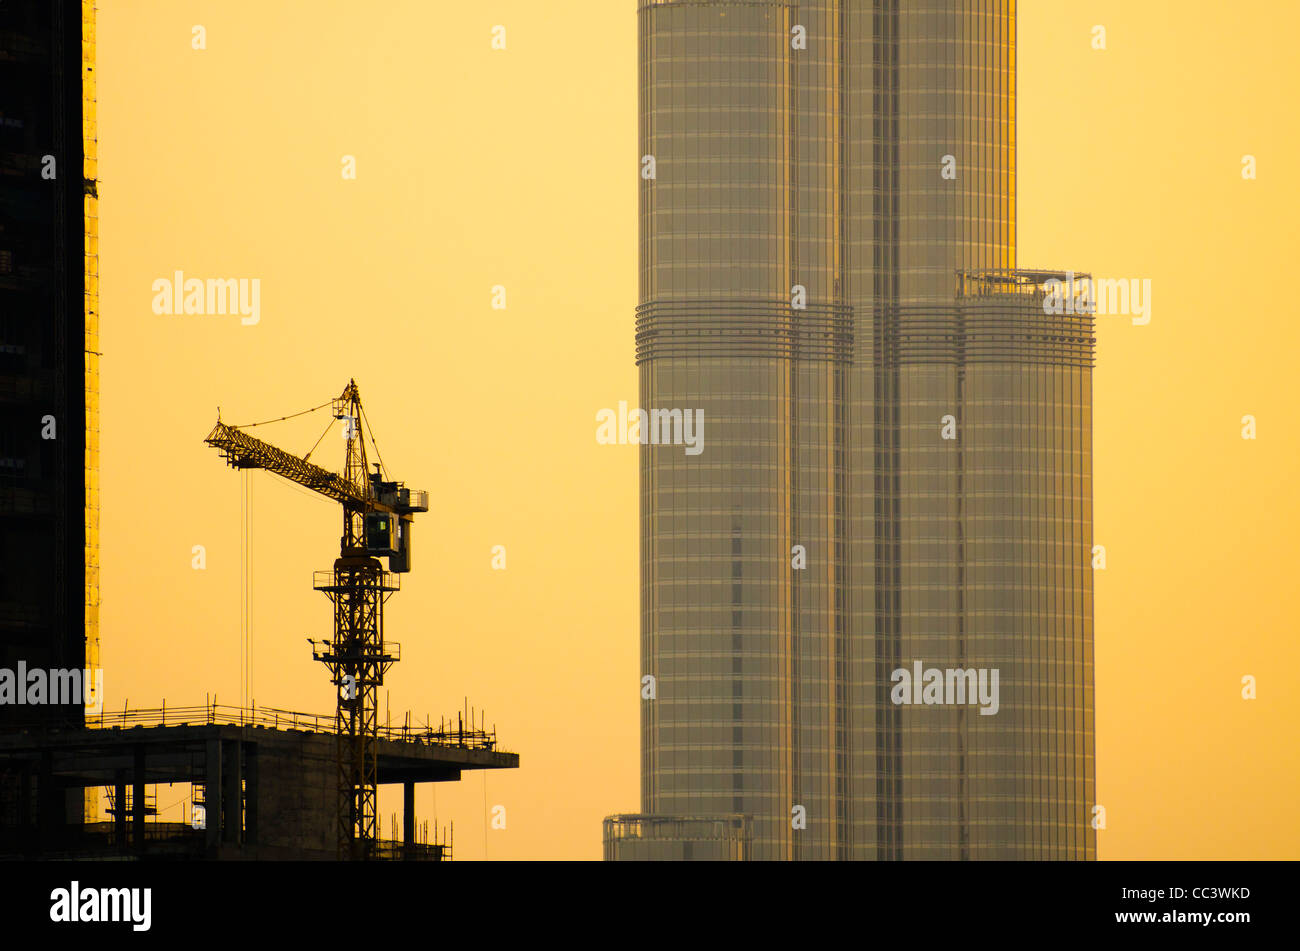 UAE, Dubai, Burj Khalifa and buildings under construction Stock Photo